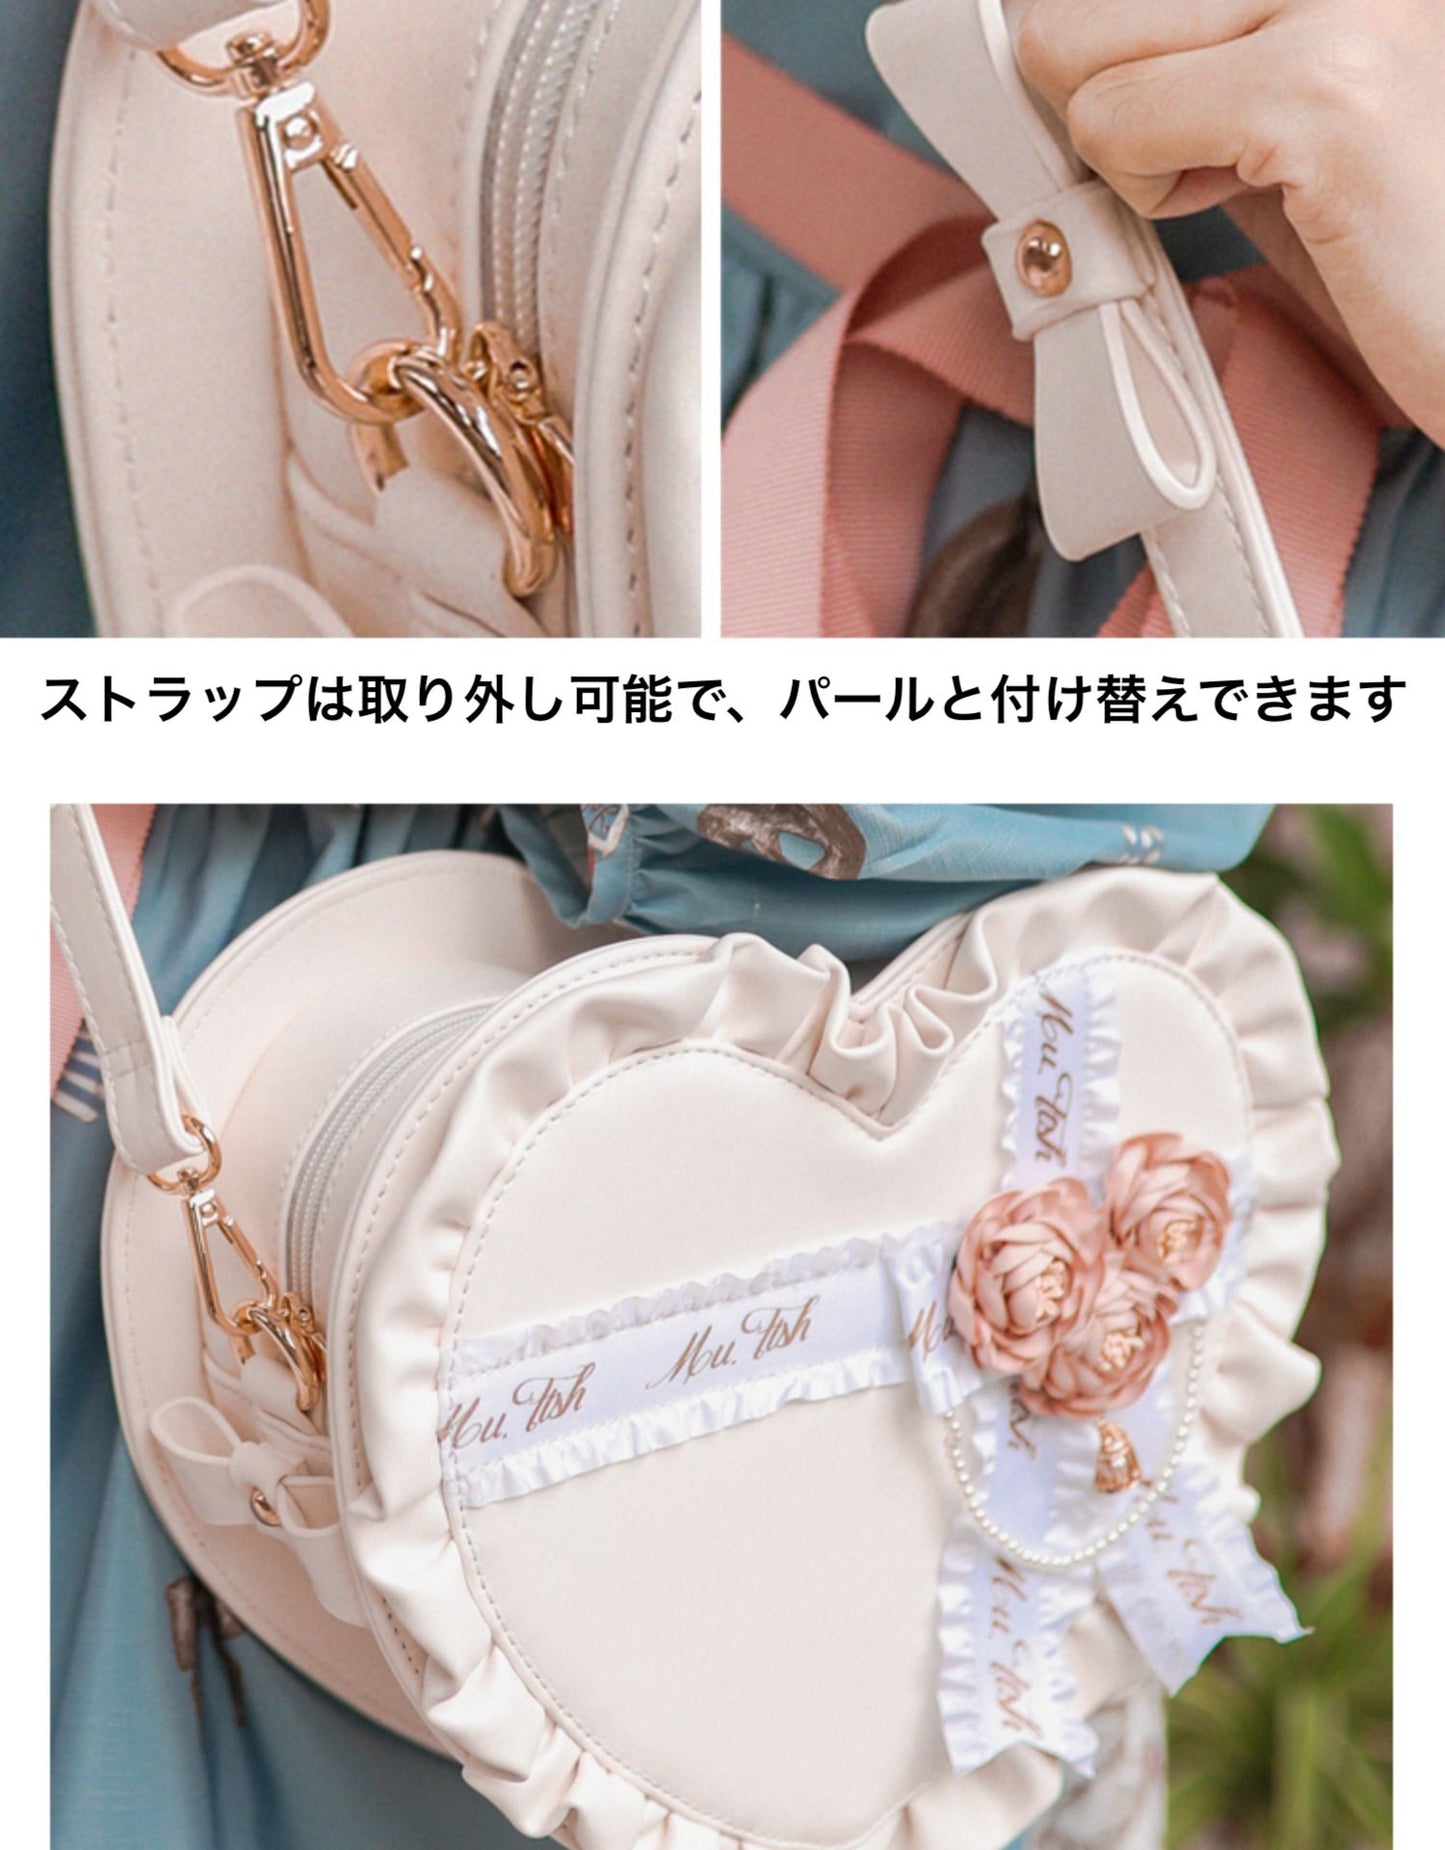 Big Heart Lolita Bag with Roses and Frills Sweet Lolita Gothic Lolita